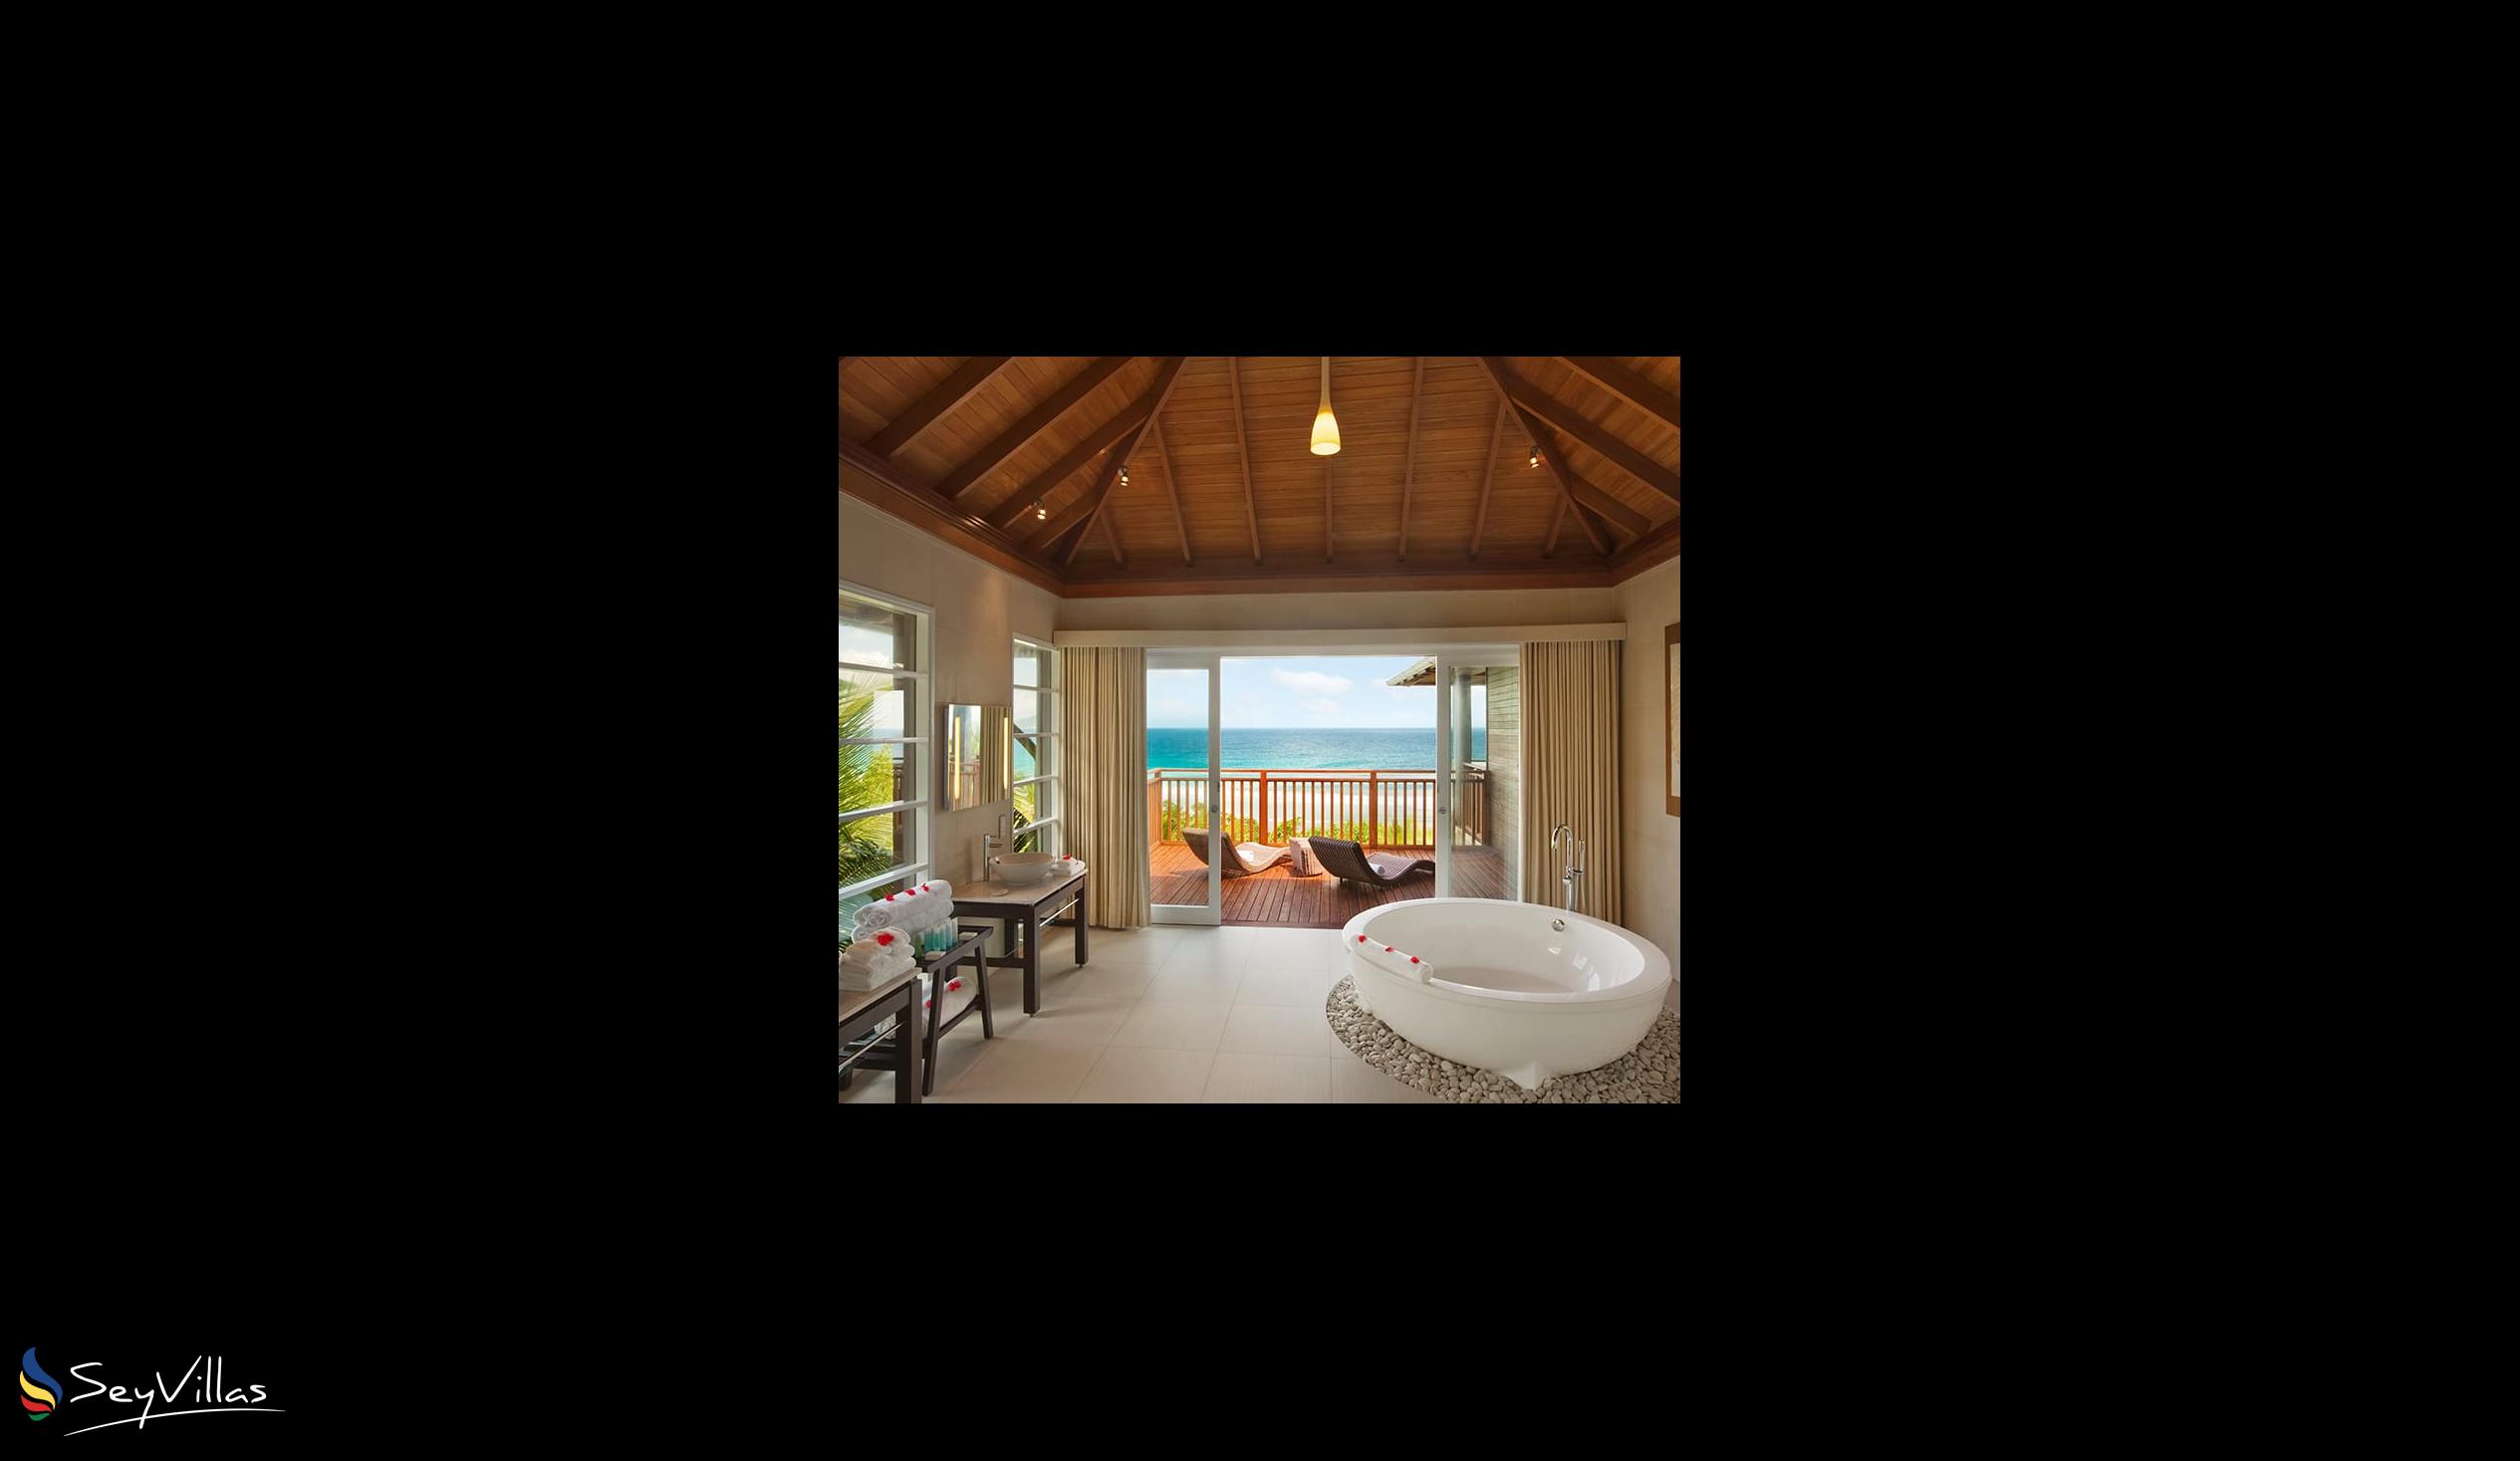 Photo 79: Hilton Seychelles Labriz Resort & Spa - Two Bedroom Silhouette Estate - Silhouette Island (Seychelles)